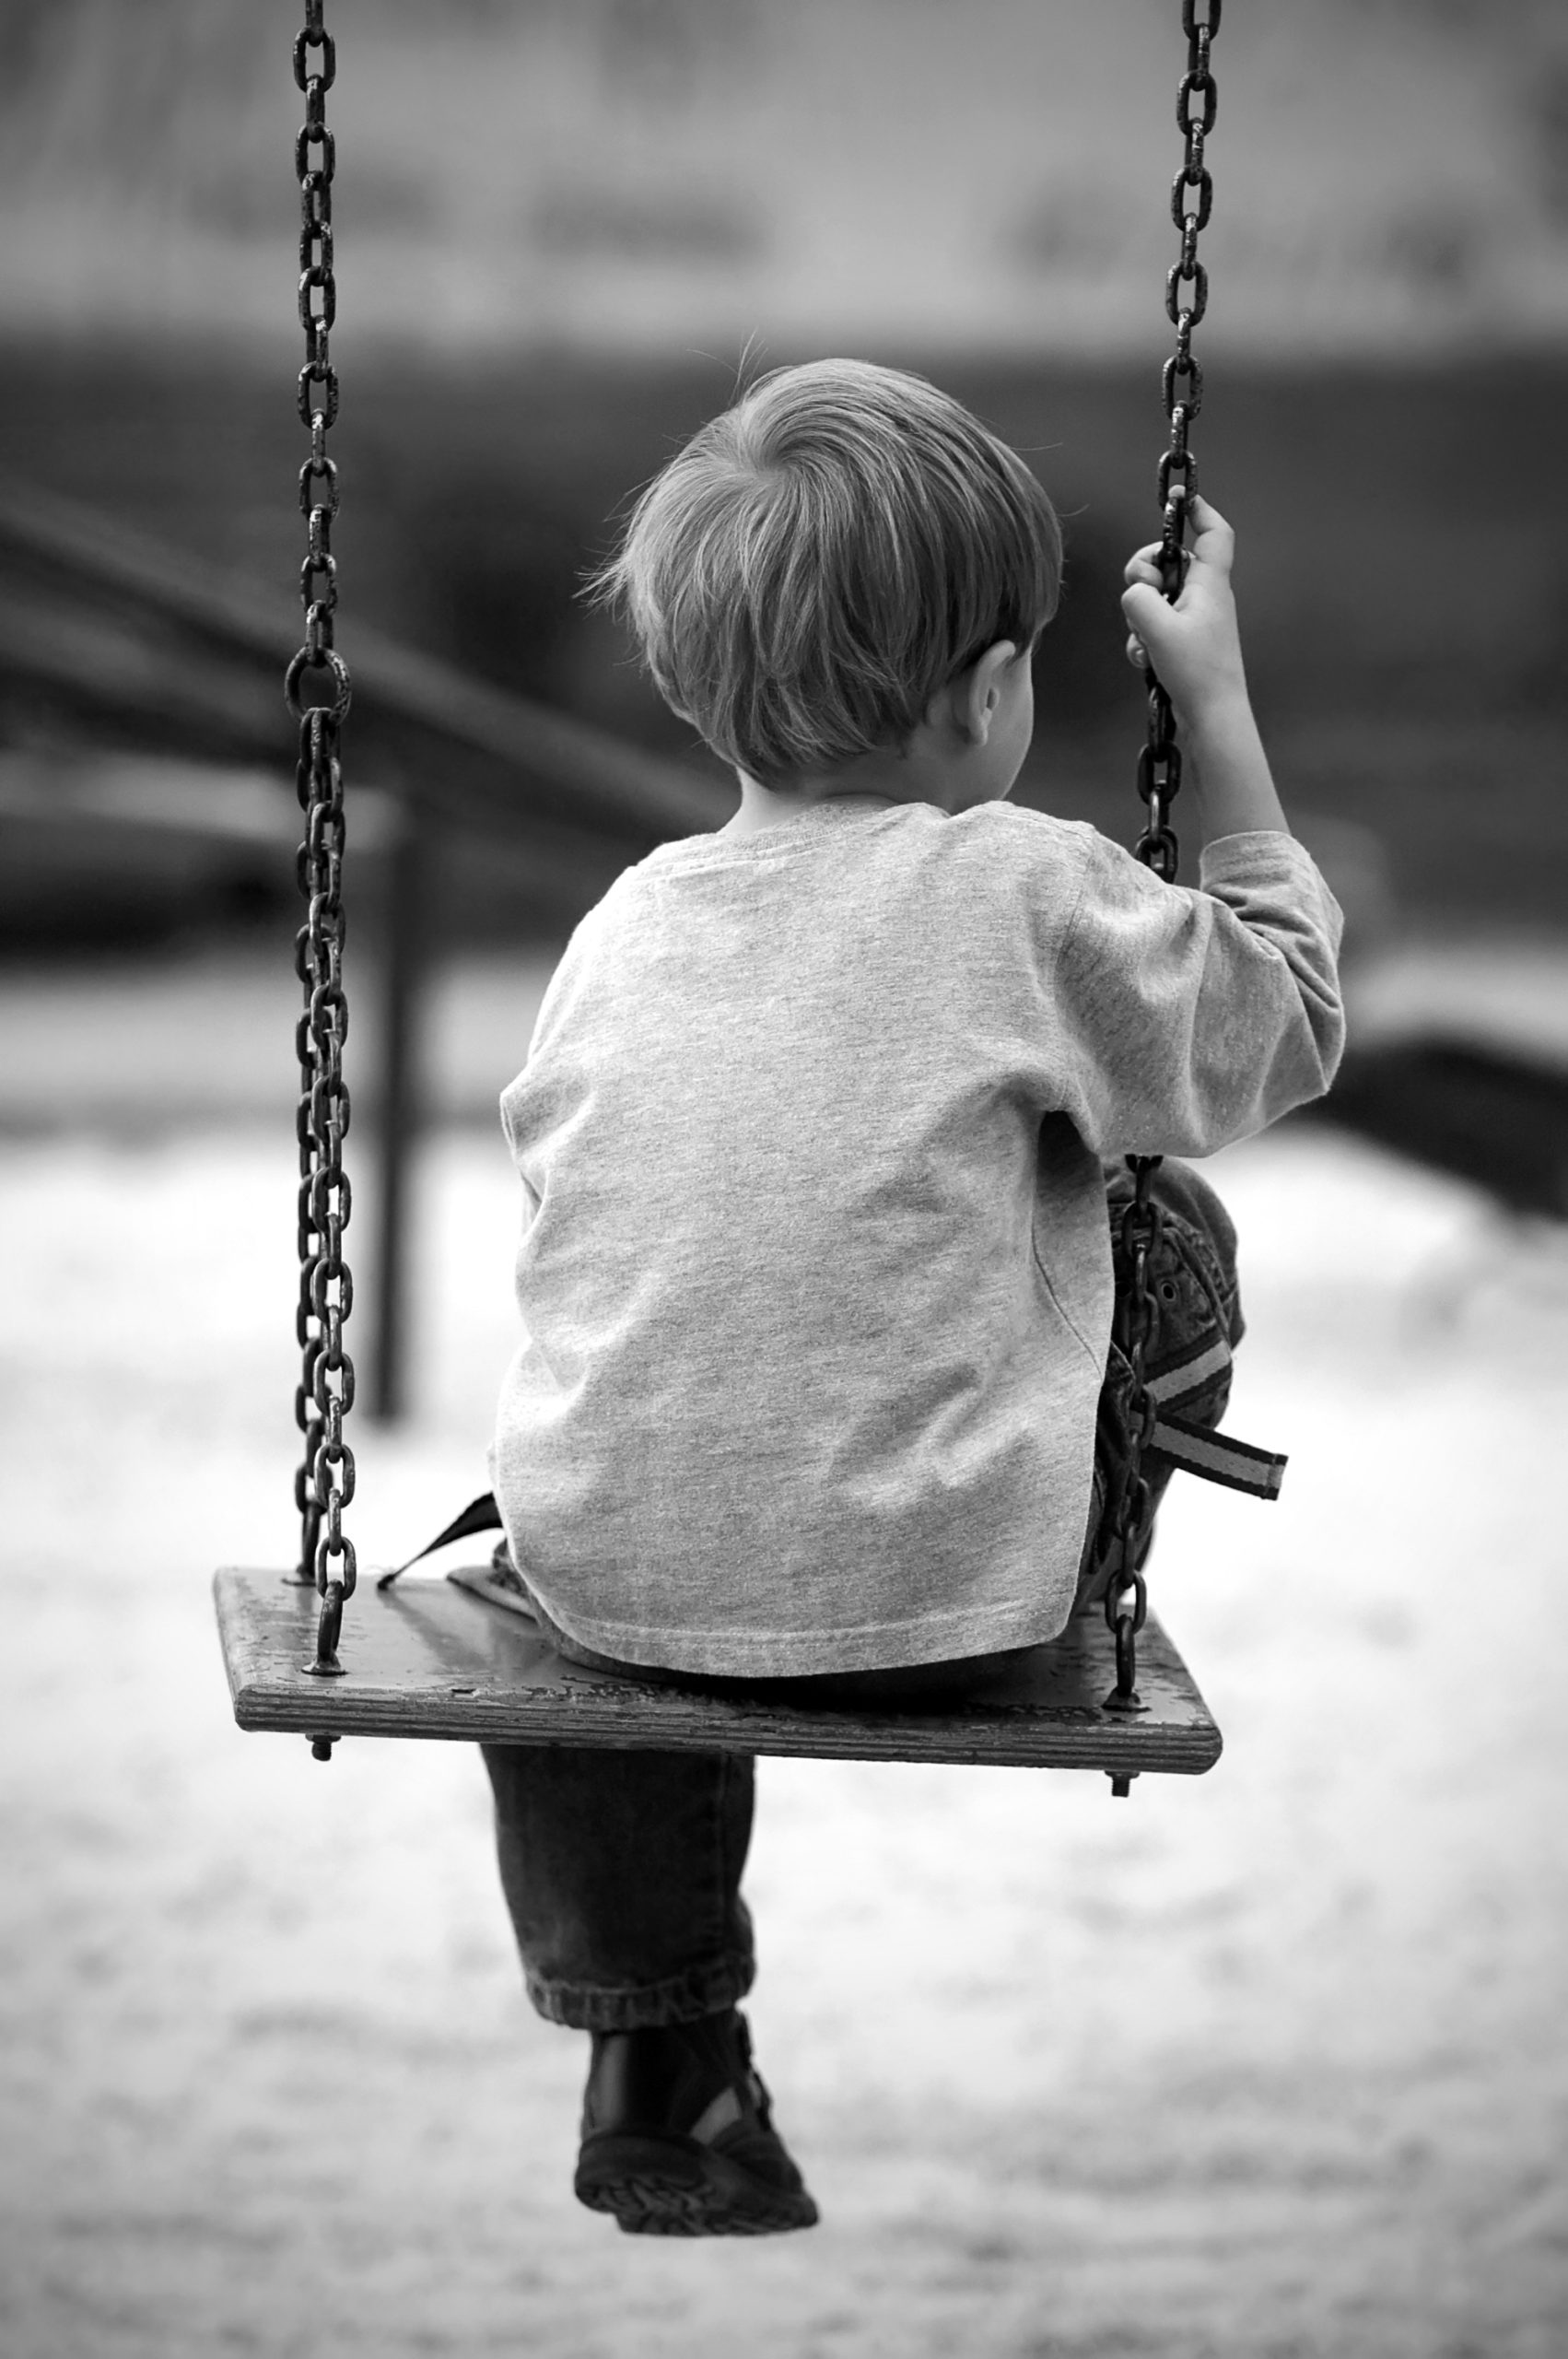 sad boy on playground swing sexual abuse victim